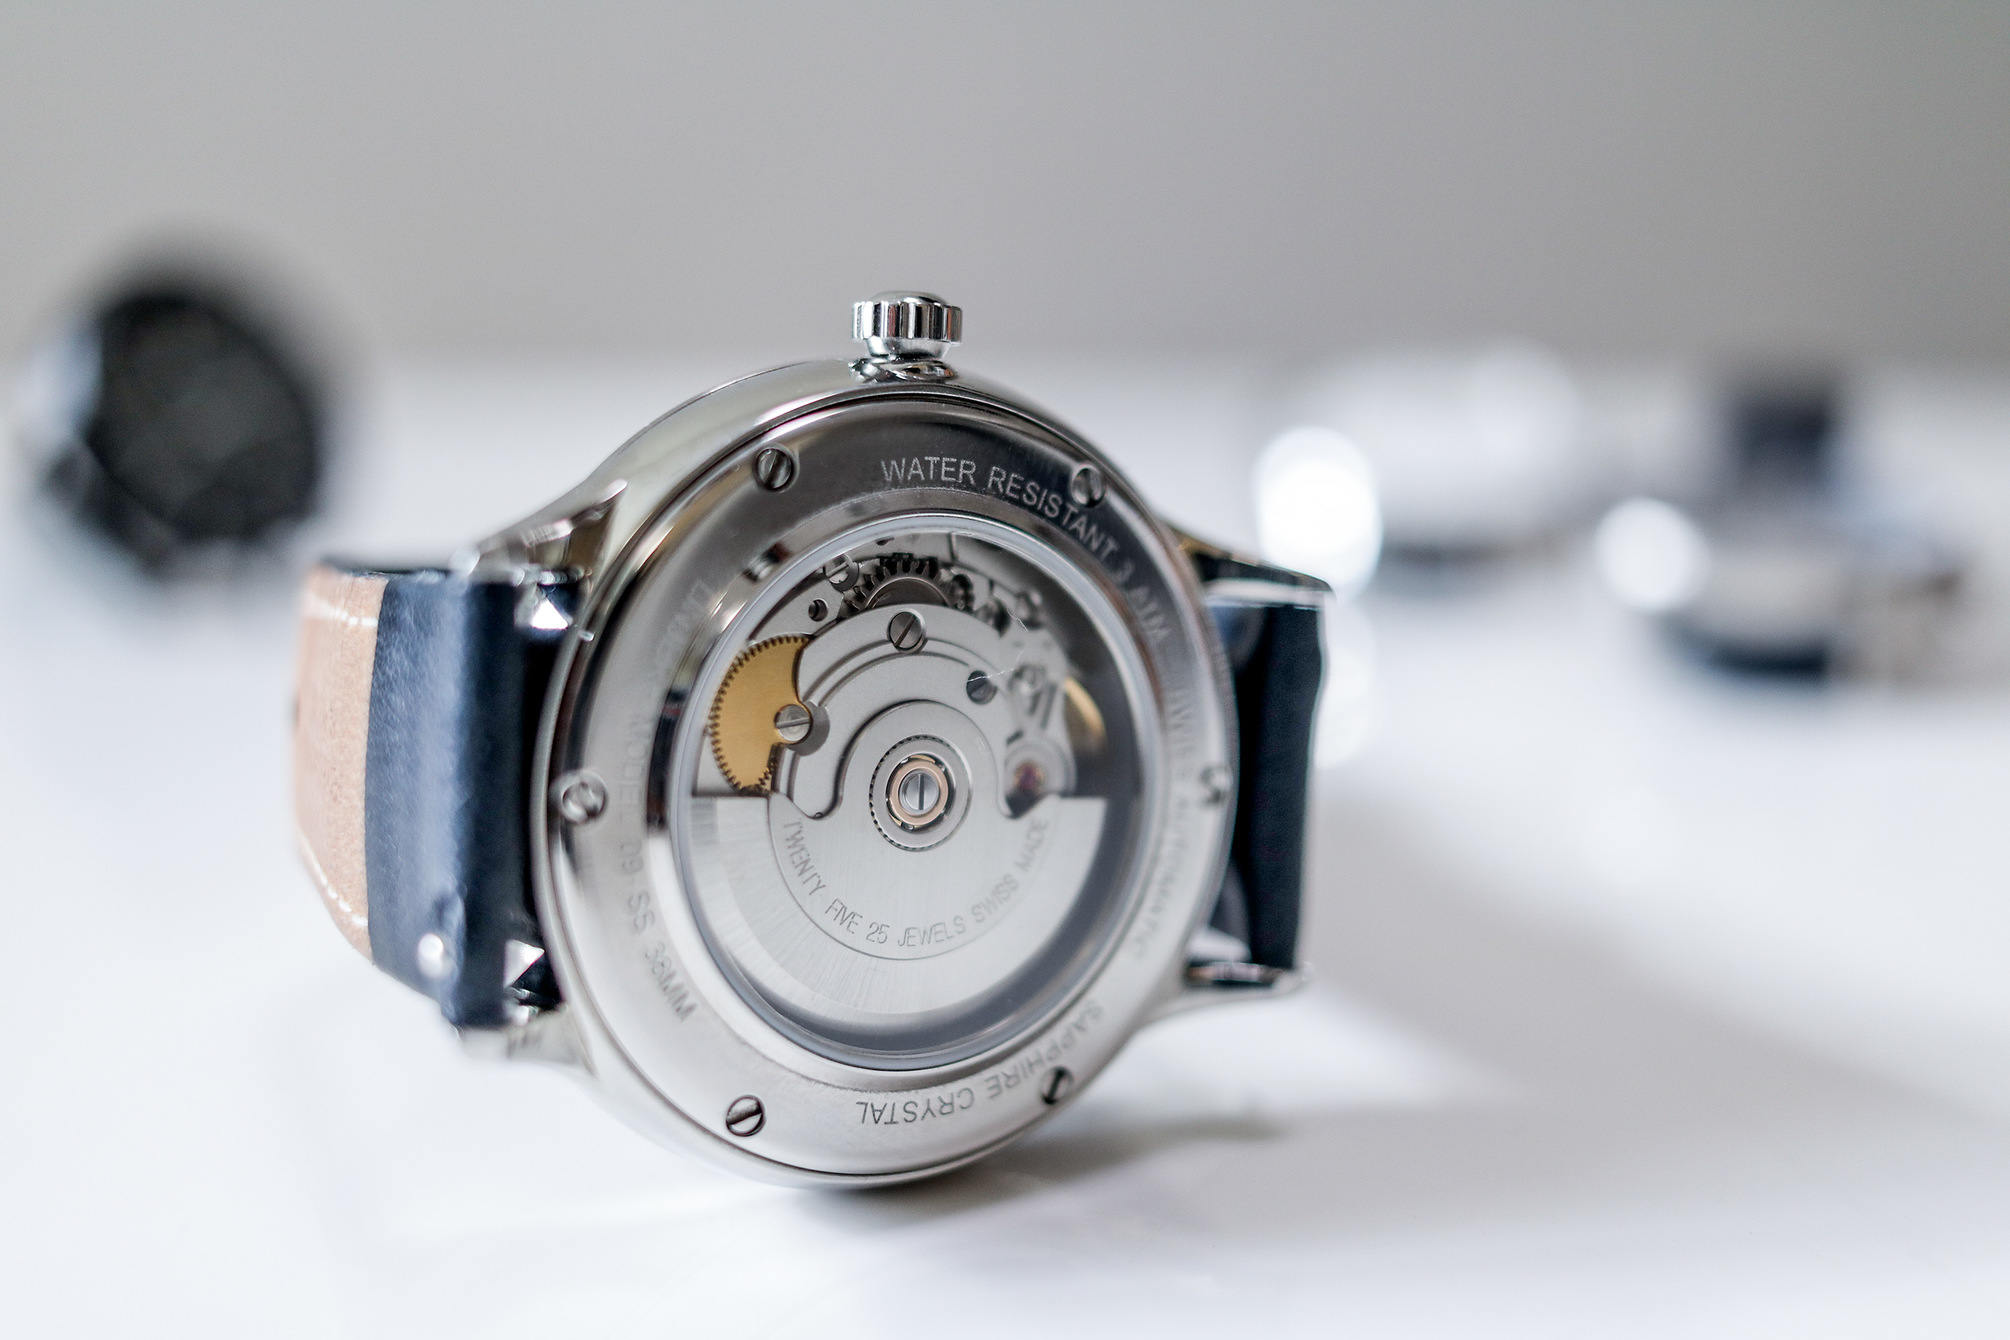 quartz v automatic watch movement